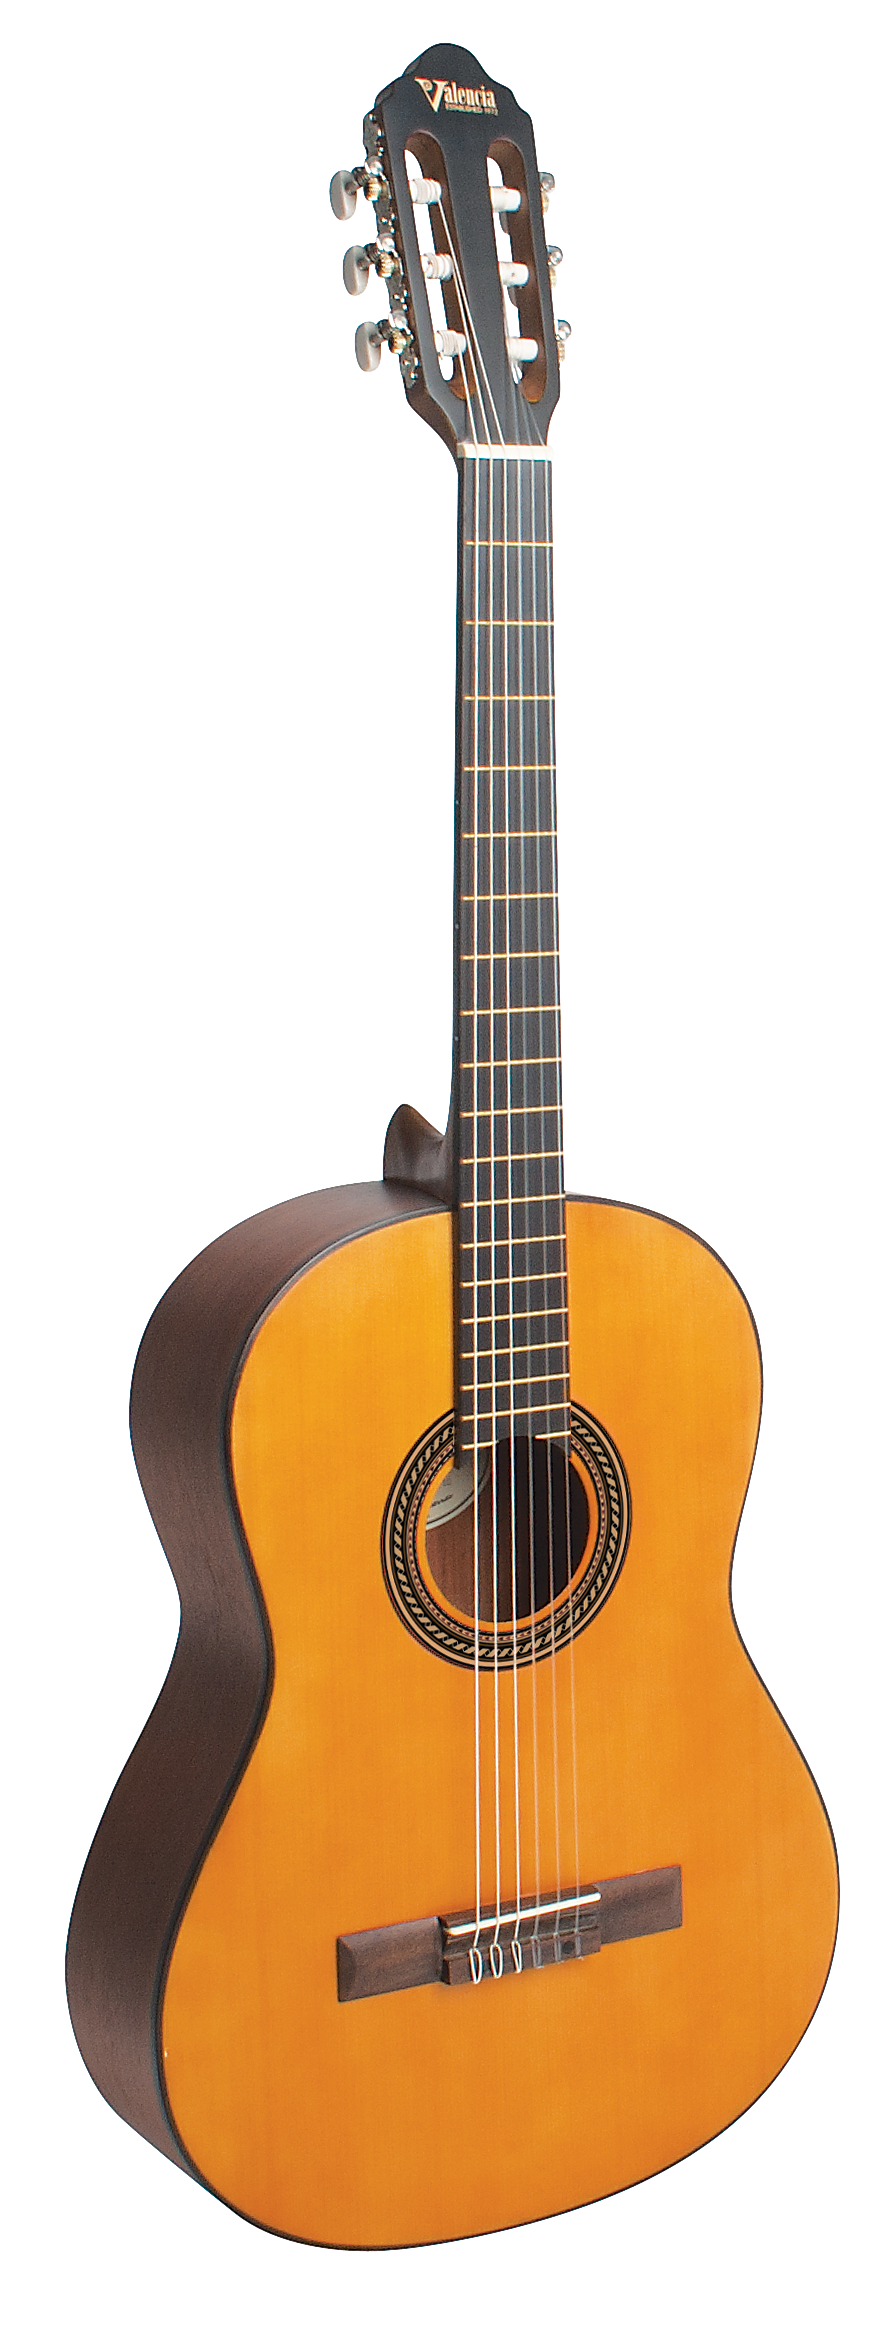 Plata Factibilidad Amanecer The Nylon String Guitar – Valencia Guitars